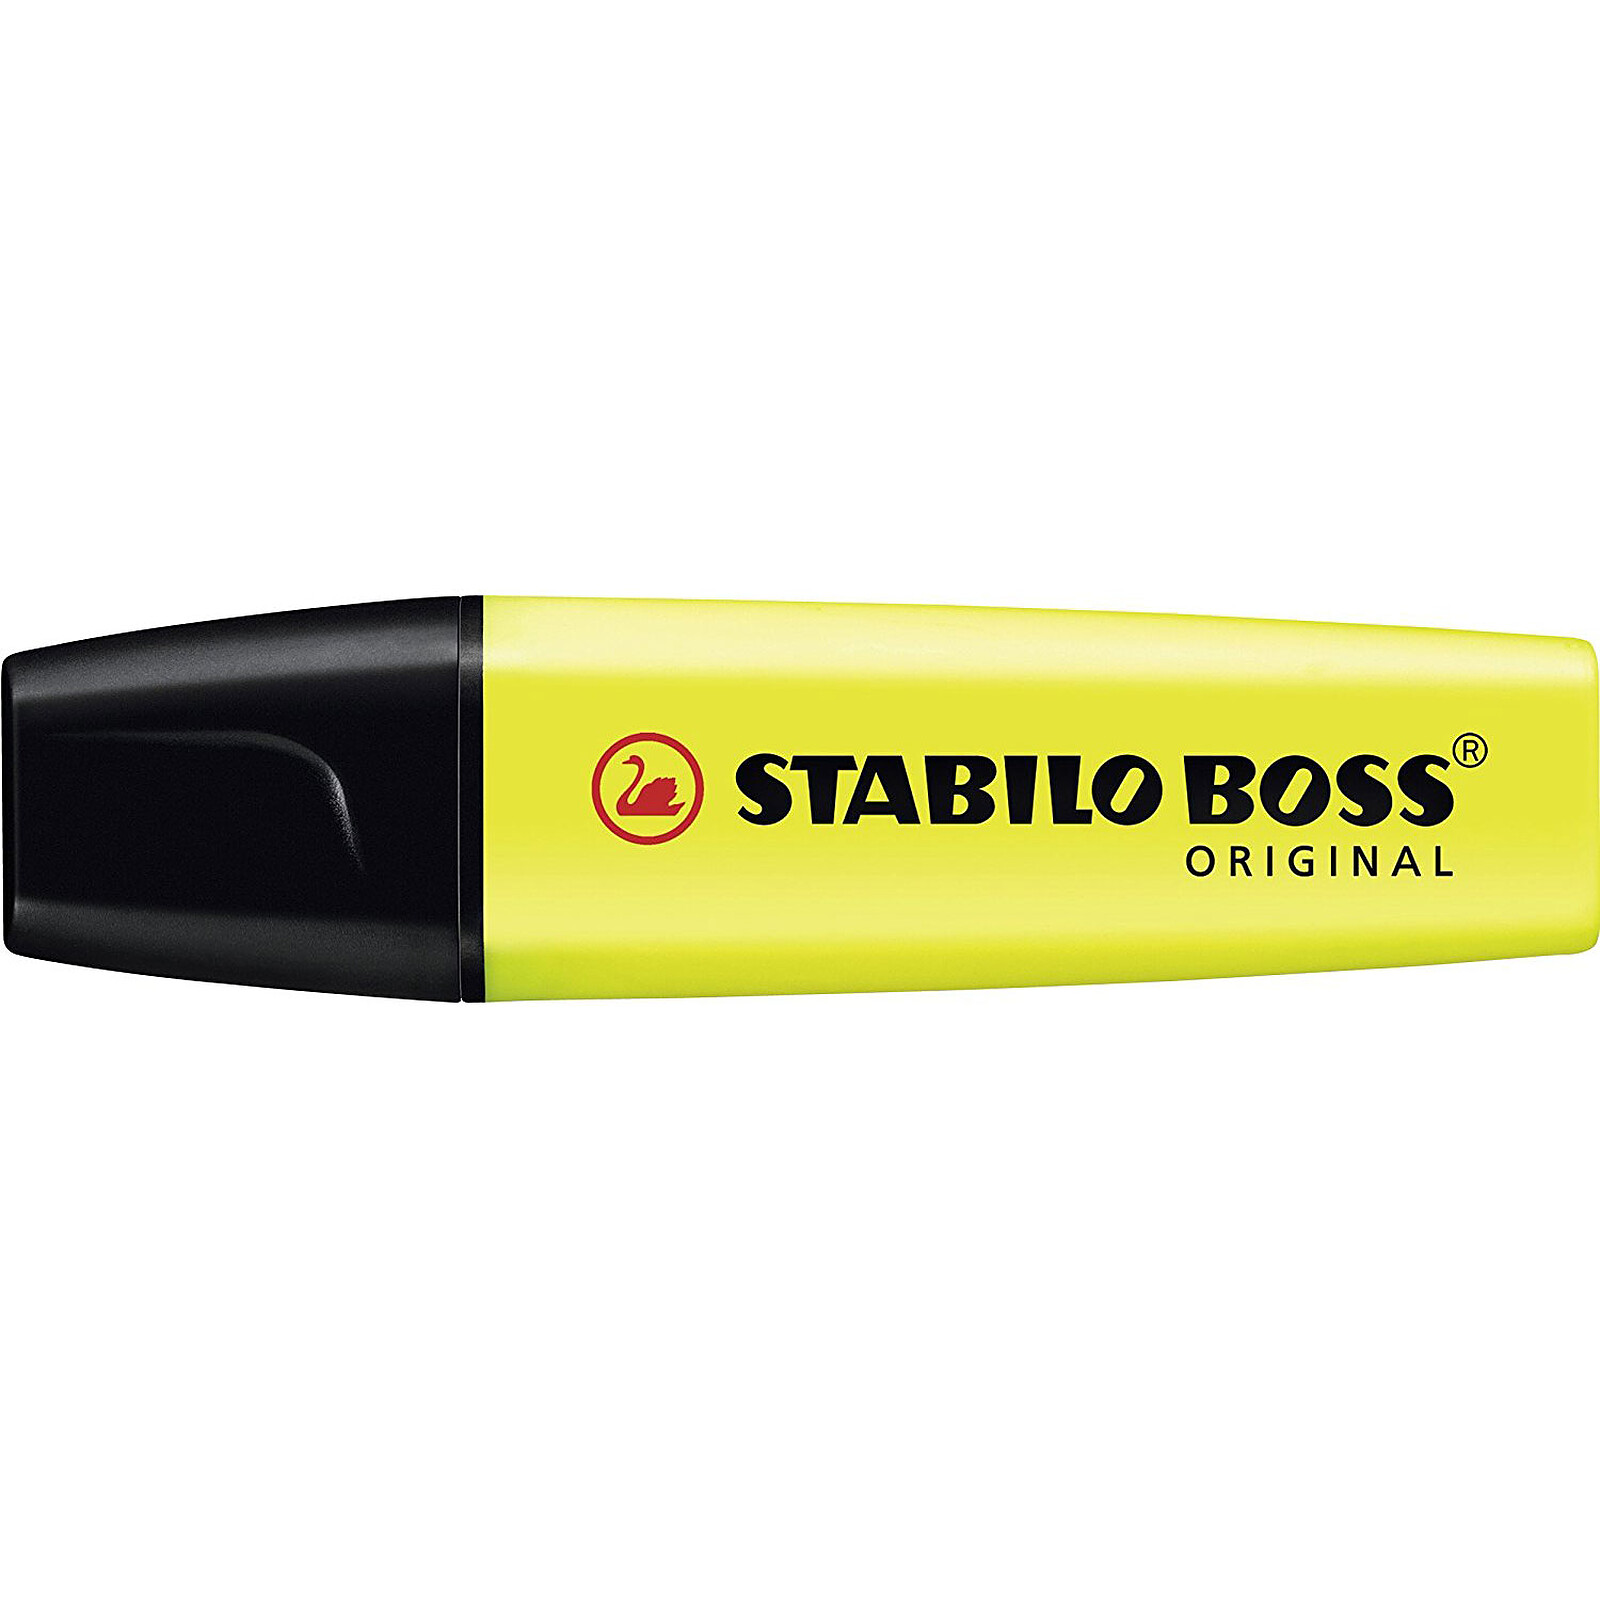 STABILO Textmarker Refill BOSS 070 / 24 jaune